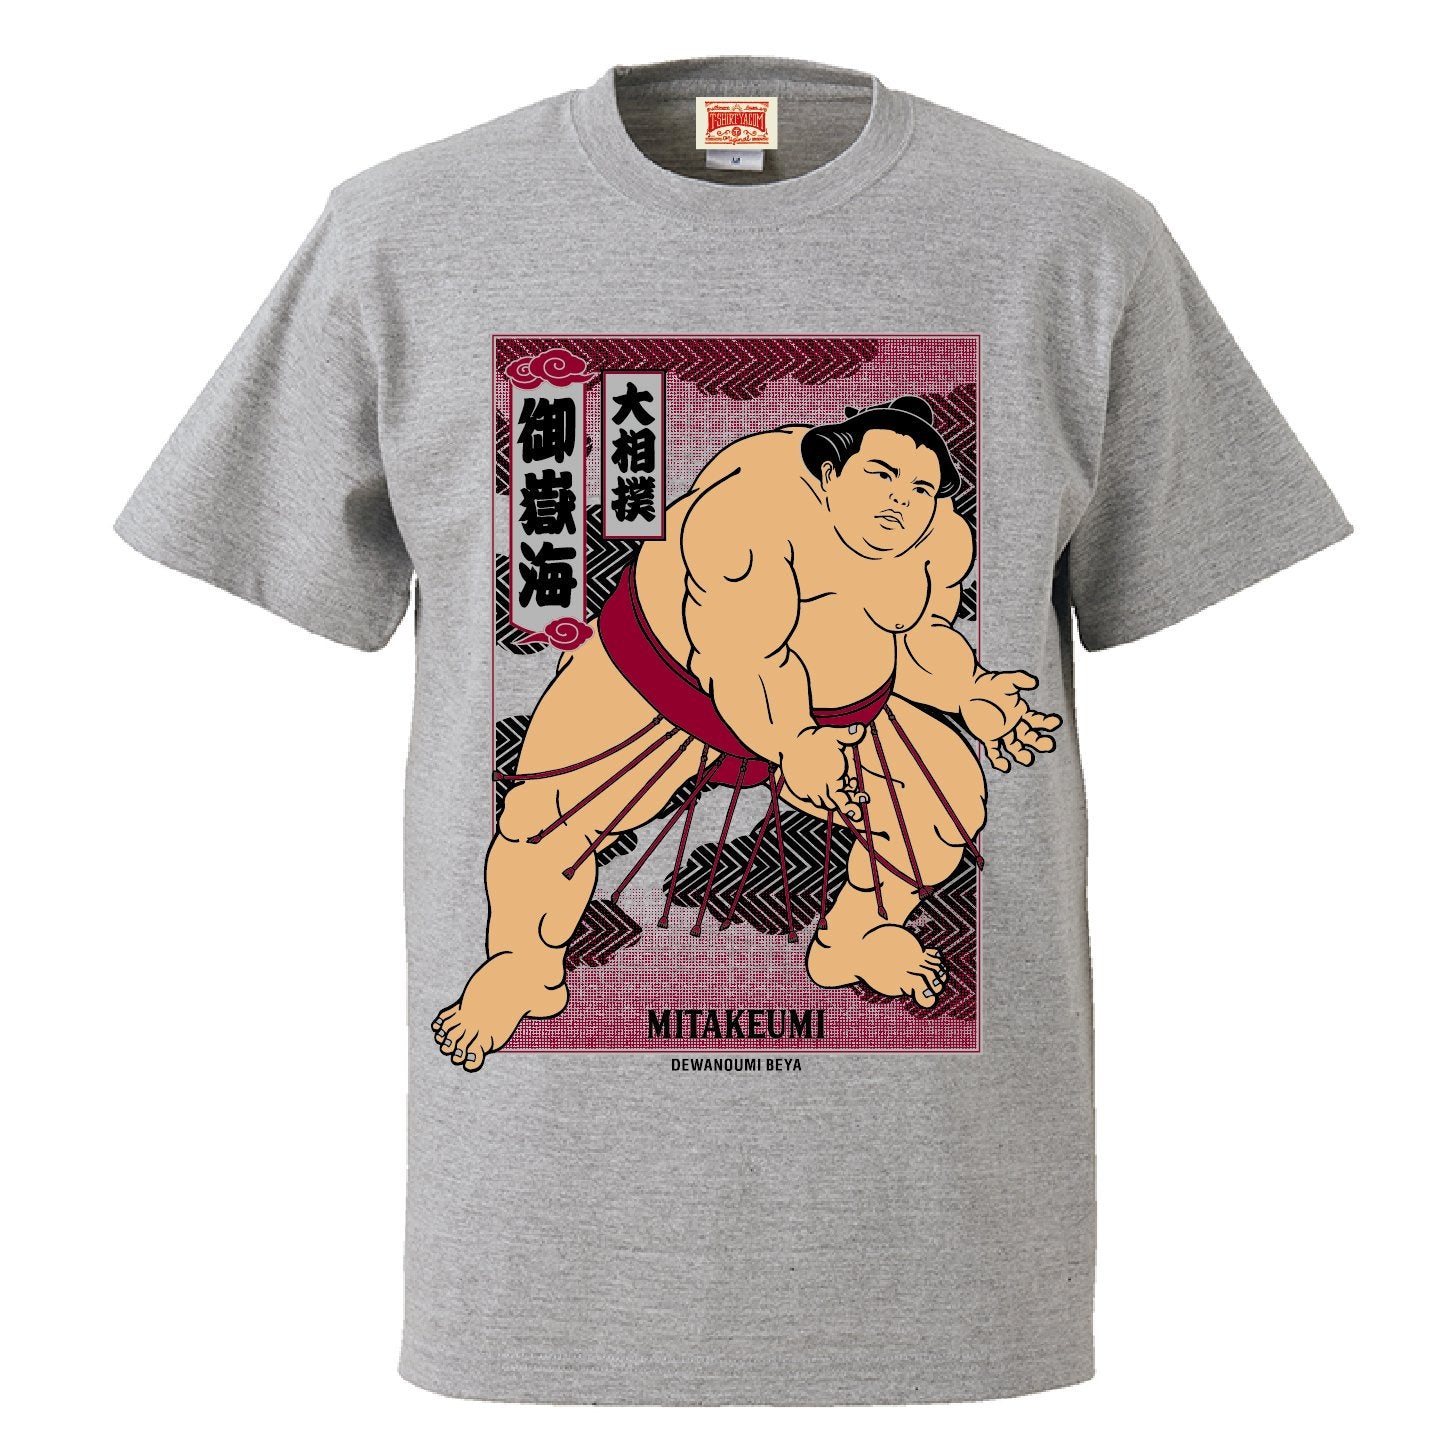 Sumo Kids T-Shirt for Sale by TeEmporium